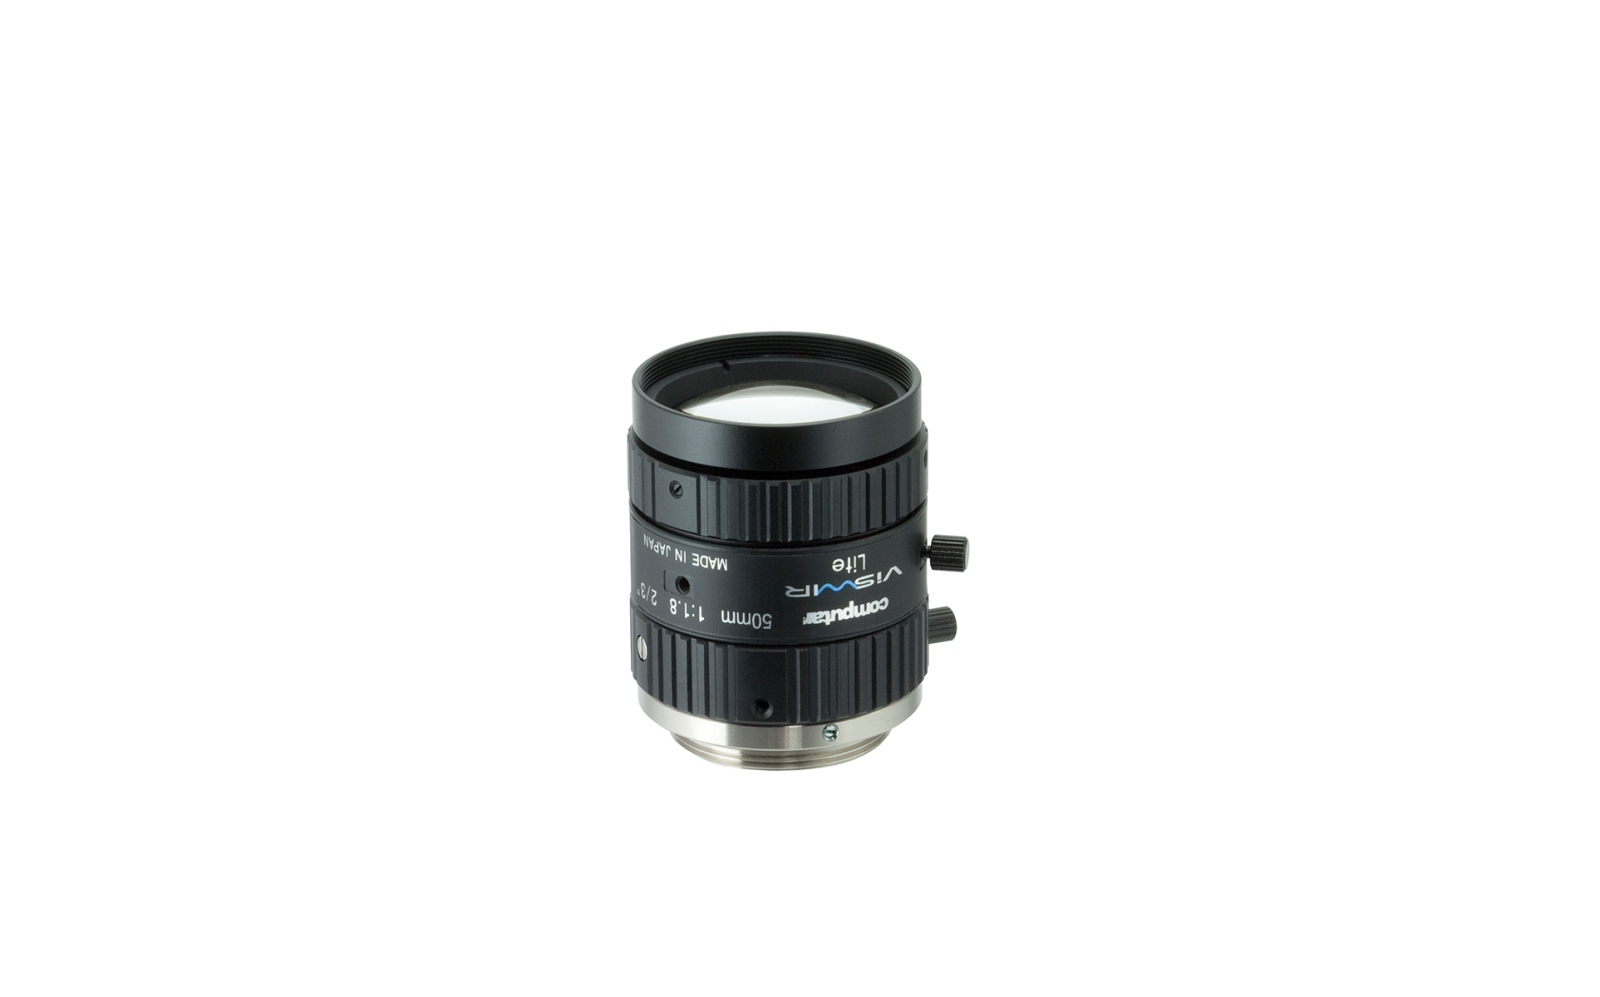 Ống kính - Lens camera Computar M5018-VSW